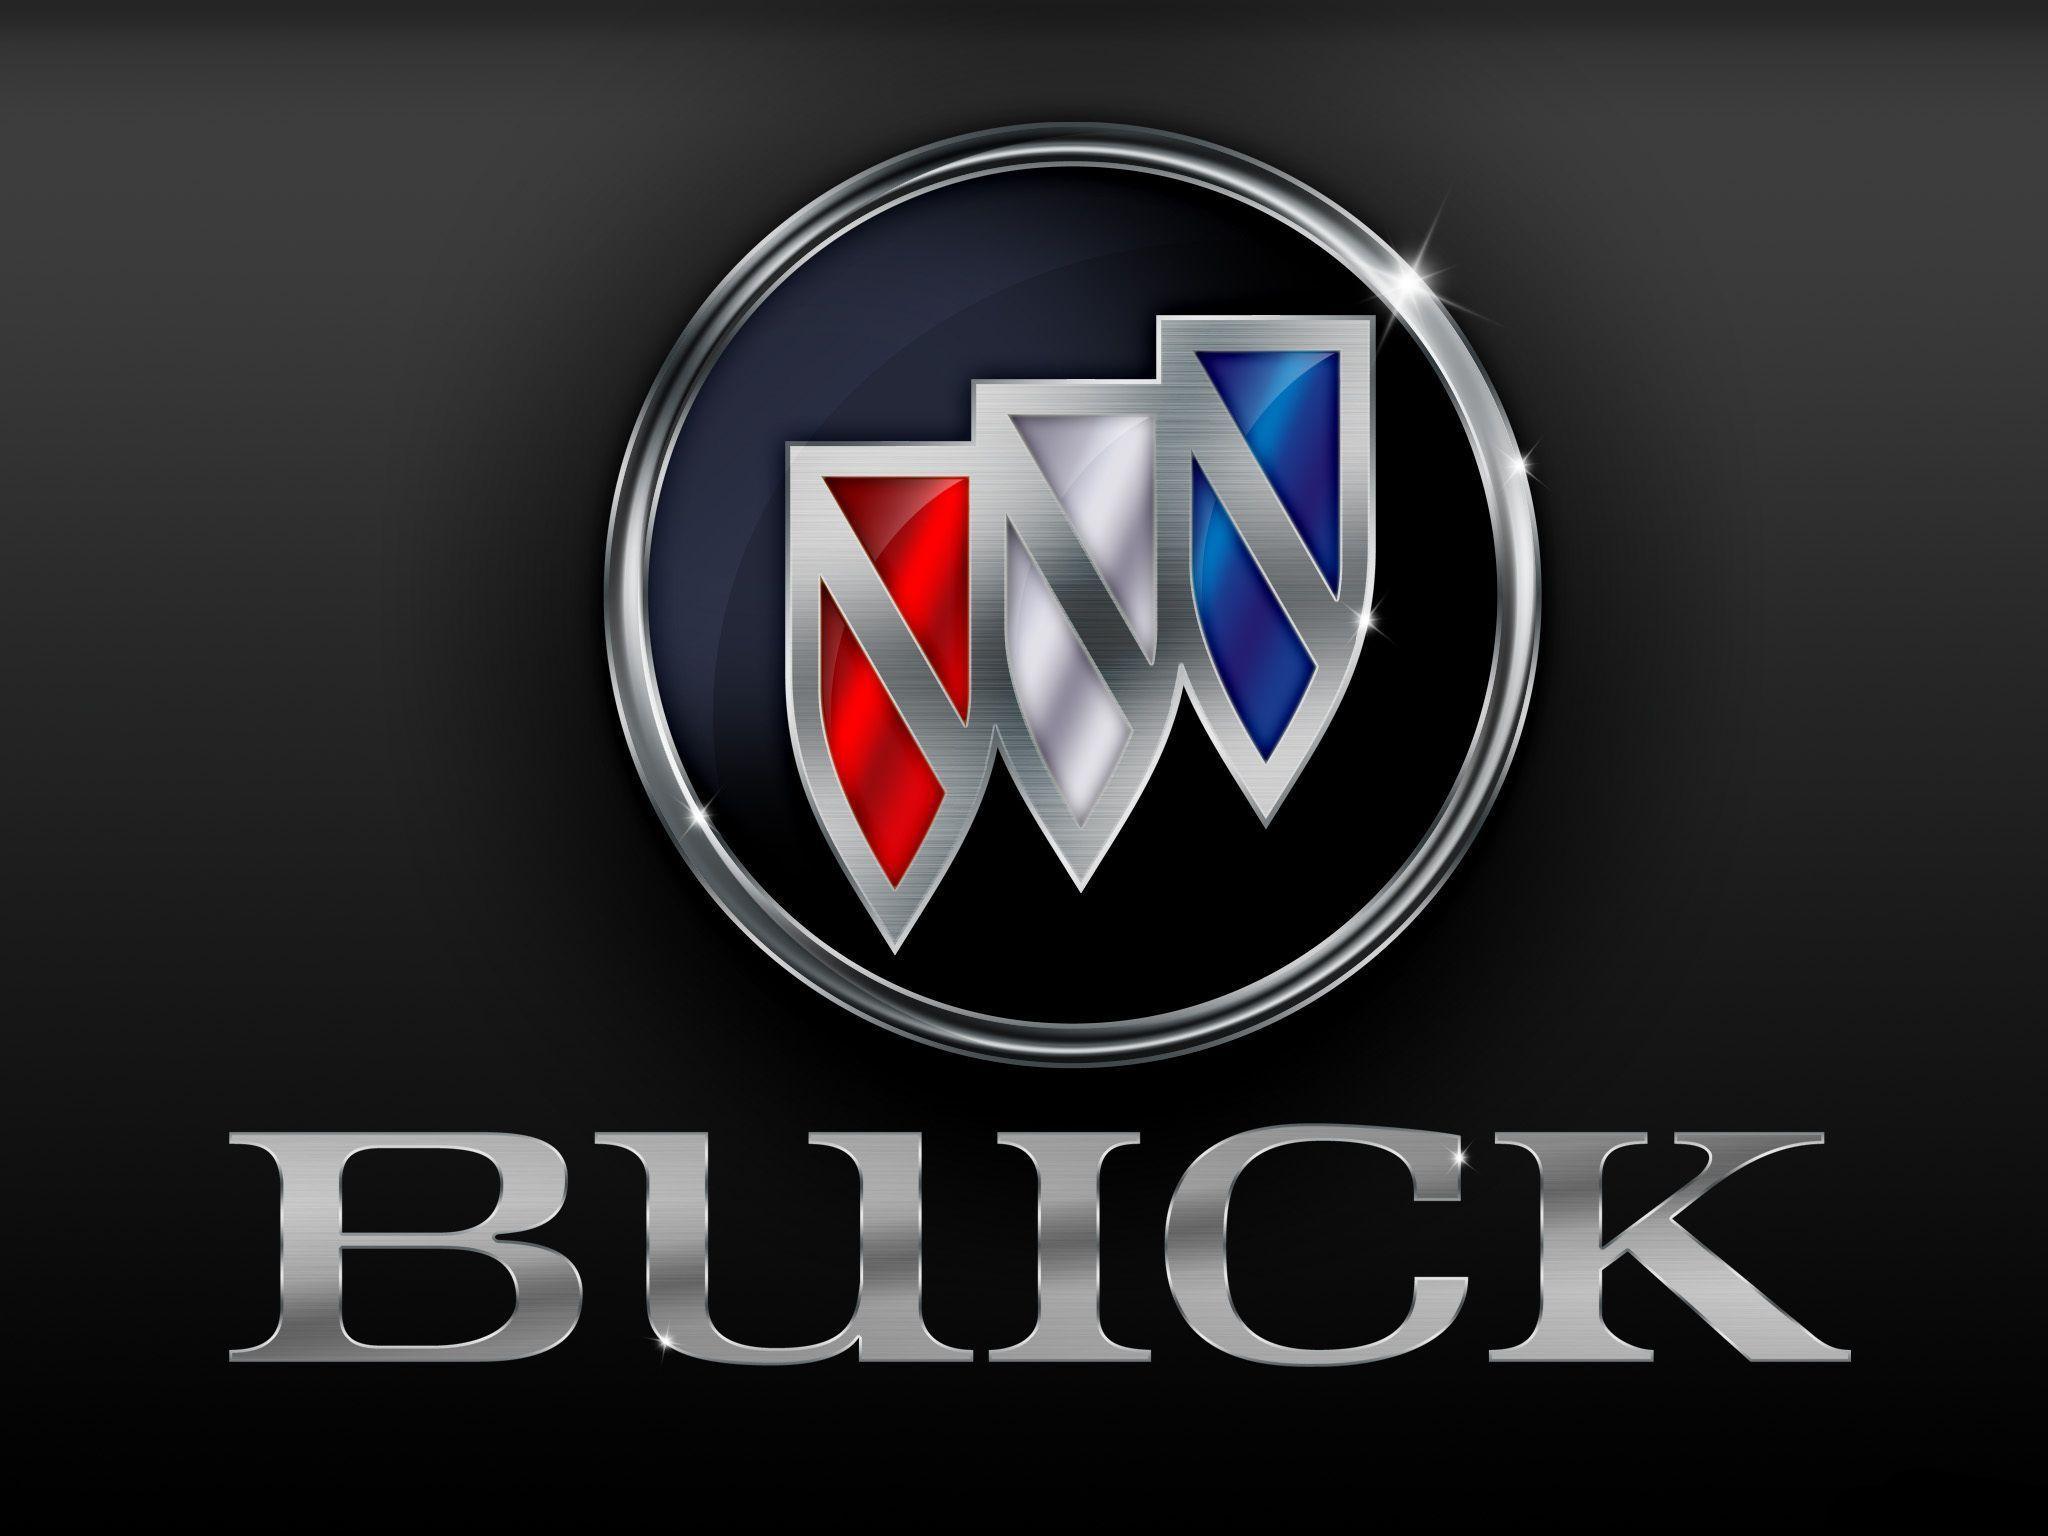 Buick Tri Shield Logo - Buick Logo, Buick Car Symbol Meaning and History | Car Brand Names.com